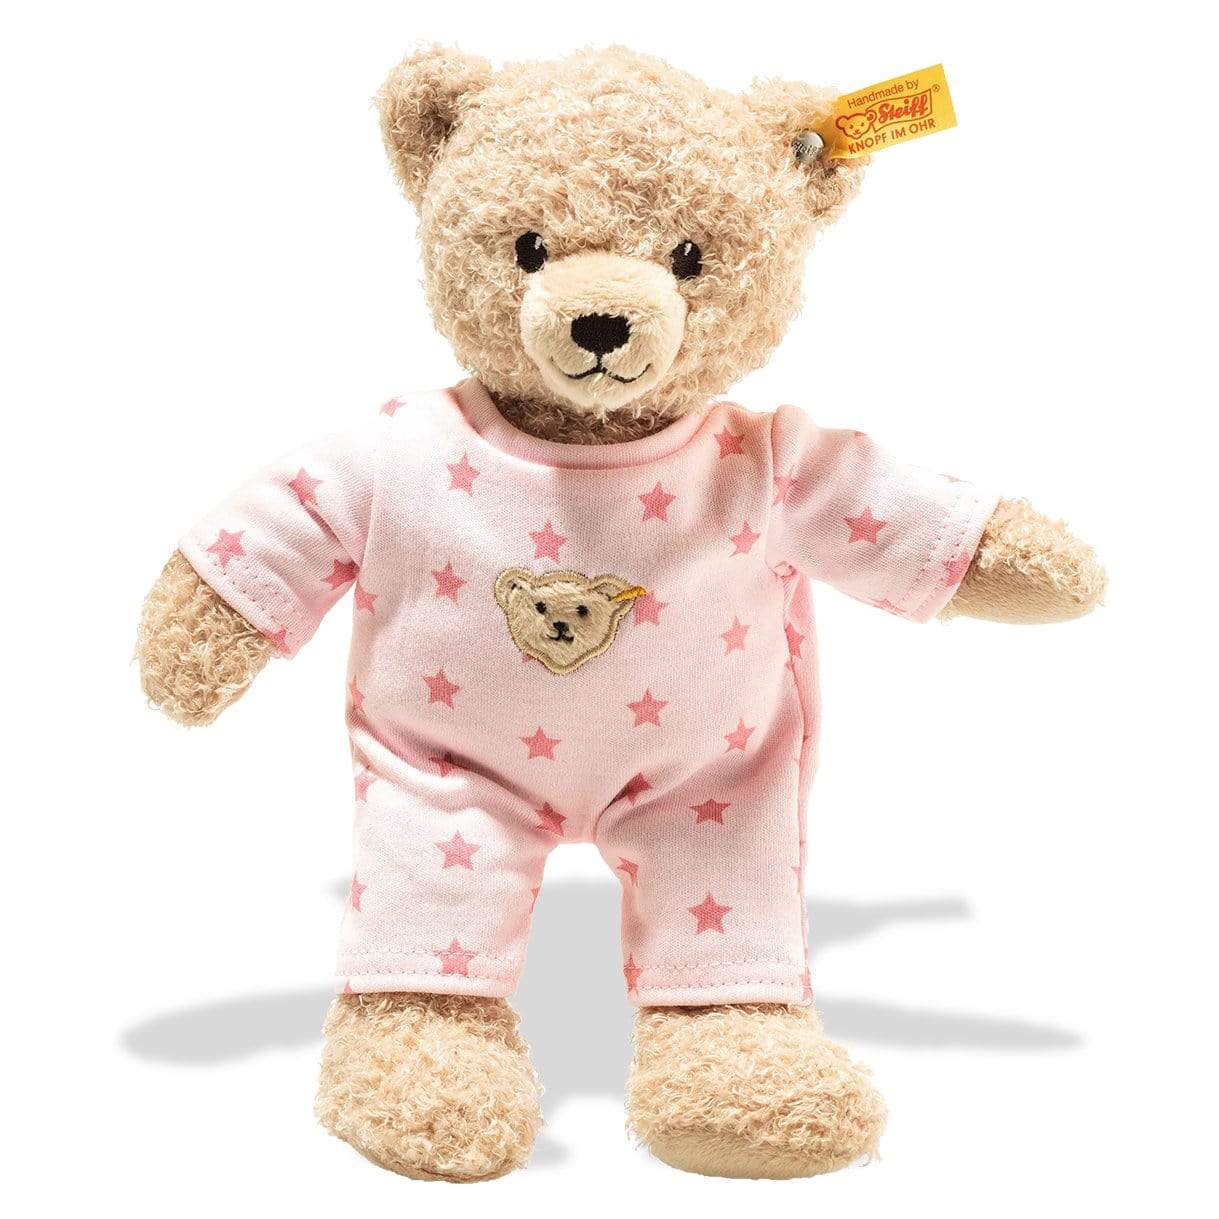 Steiff soft animals Steiff Teddy Bear in Pyjamas Pink 25cm 241659